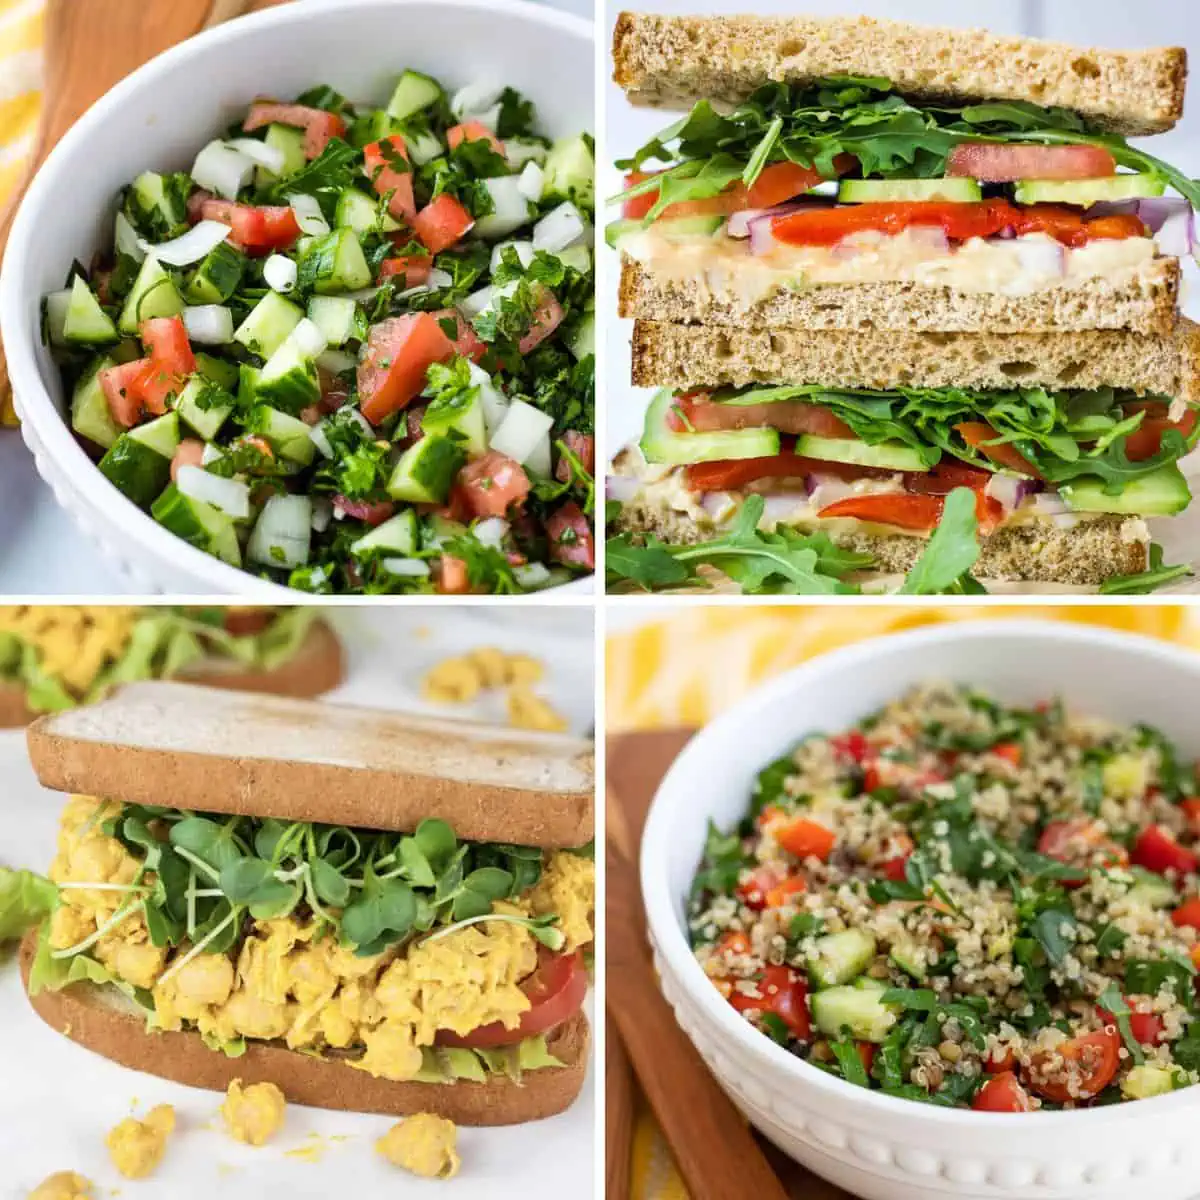 Vegan Picnic Ideas Collage: cucumber salad, hummus sandwich, chickpea sandwich, quinoa salad.
